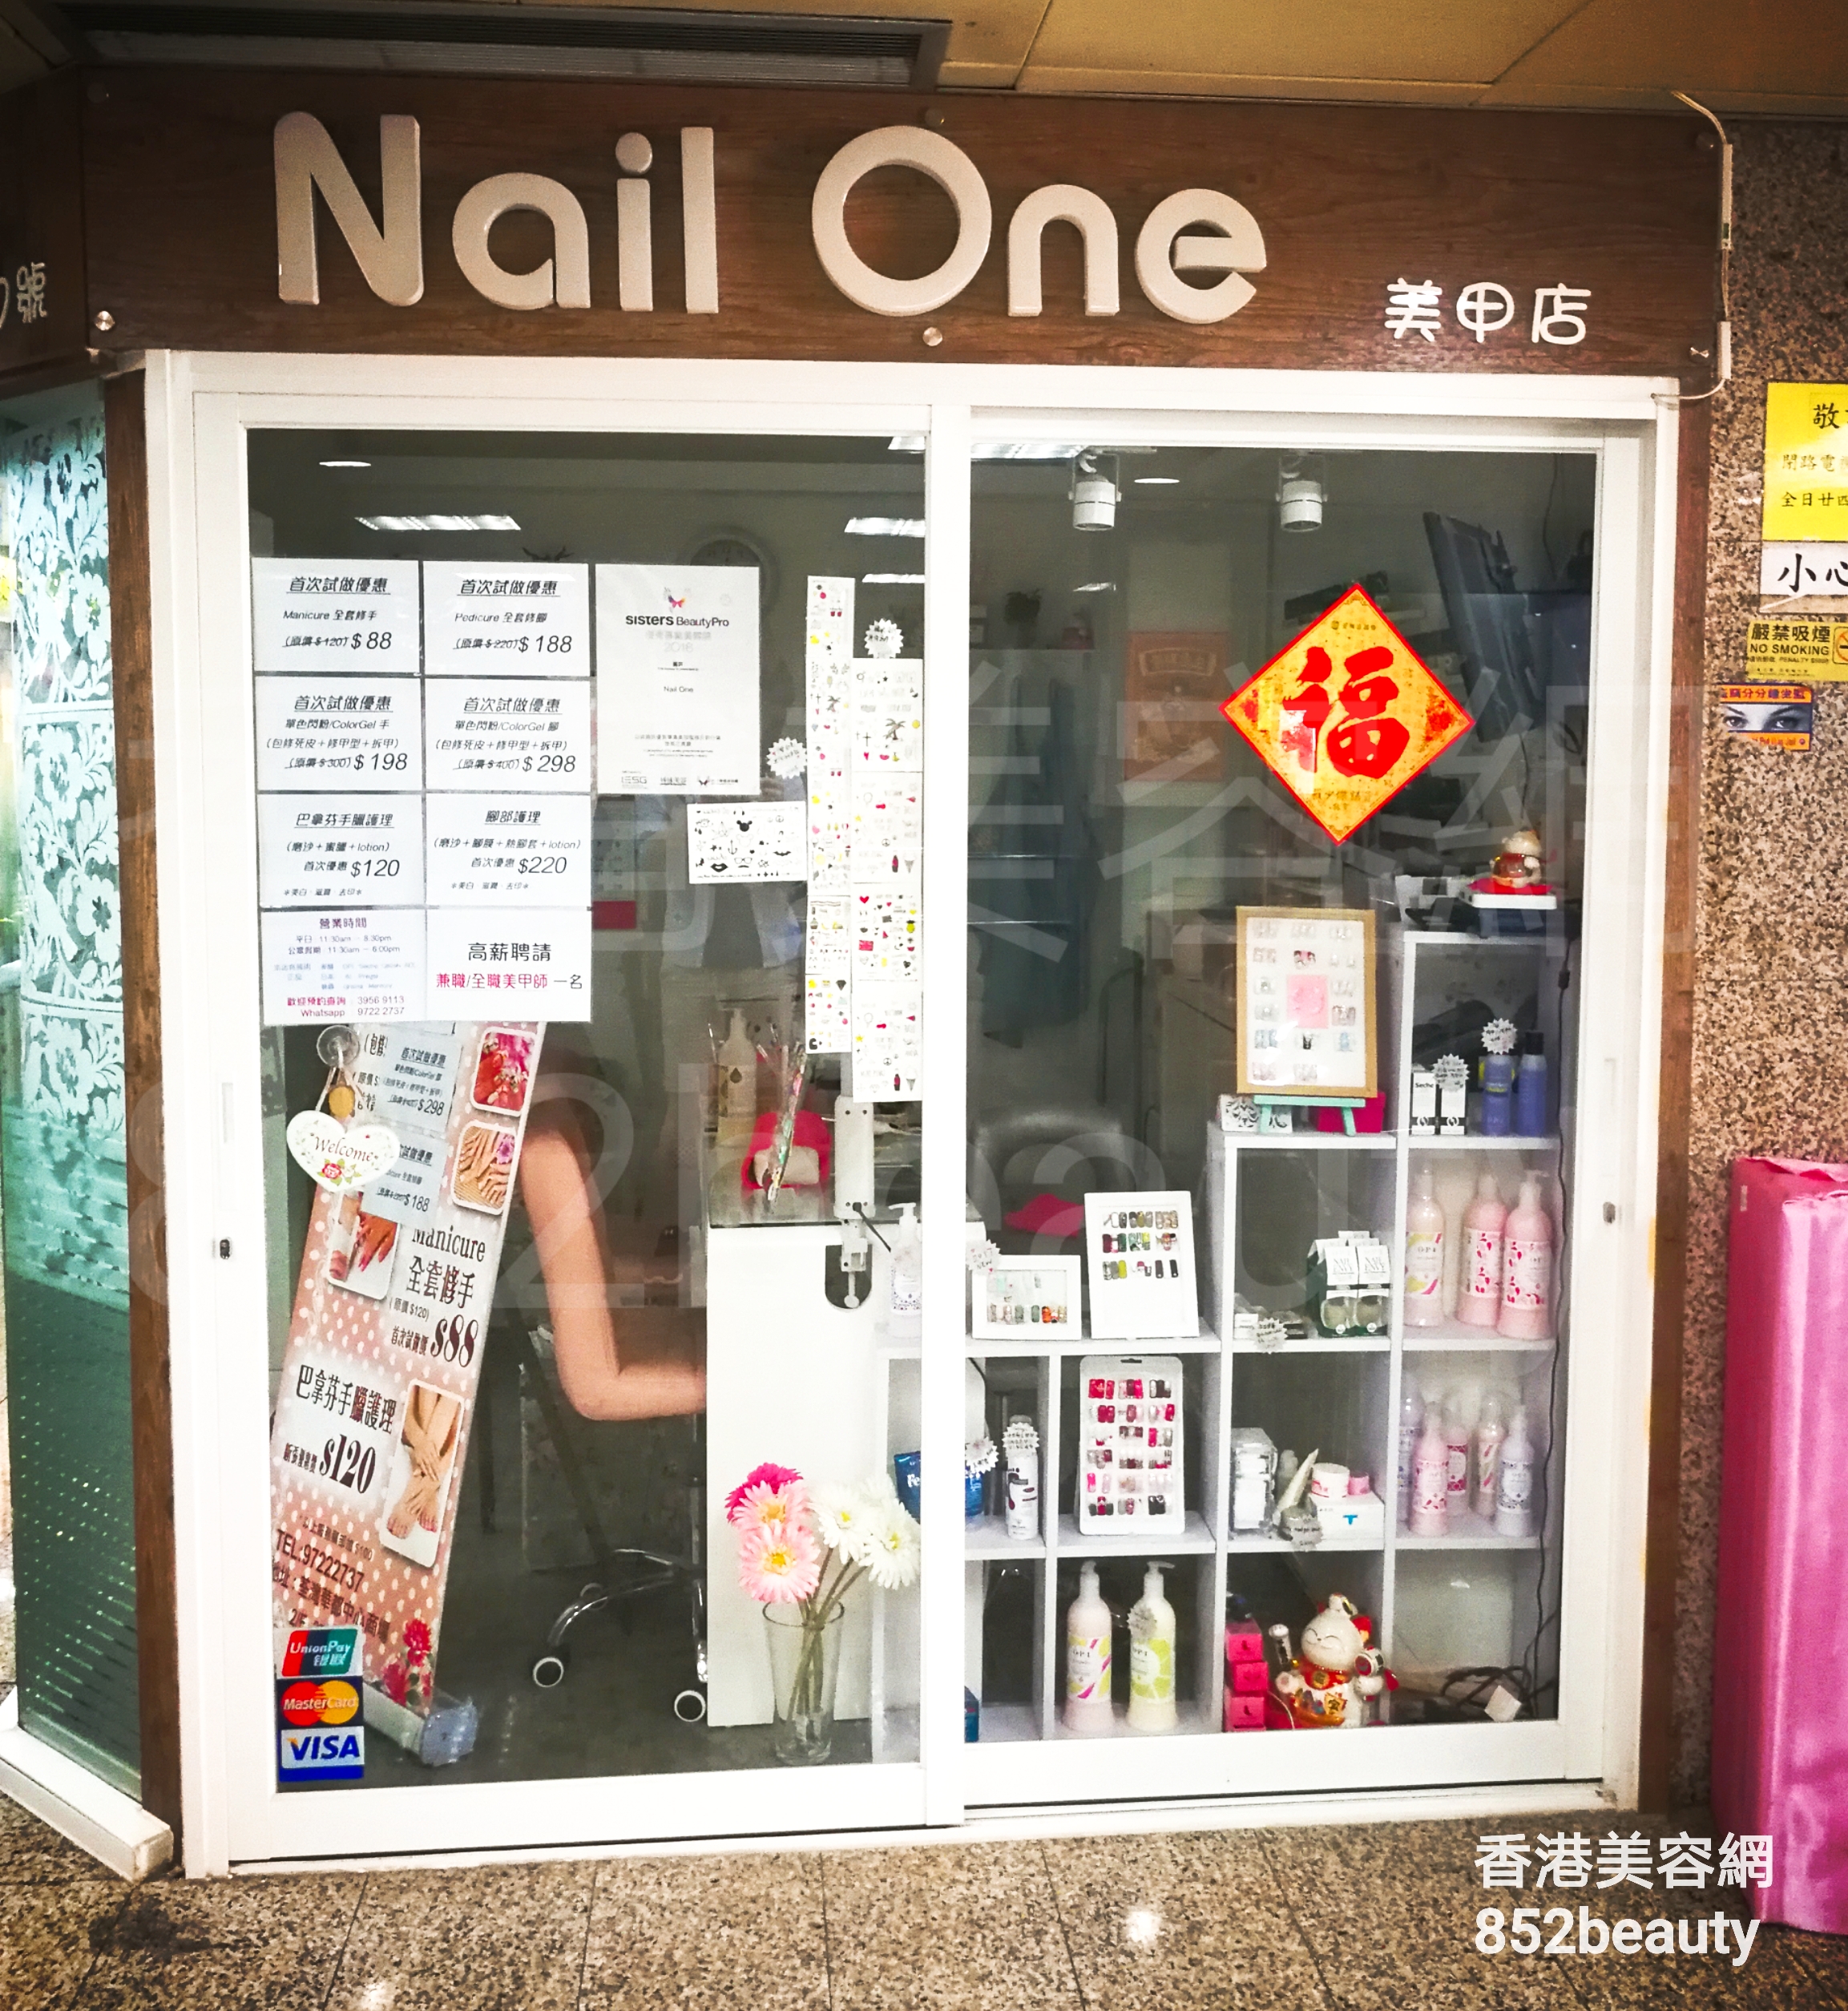 Manicure: Nail One 美甲店